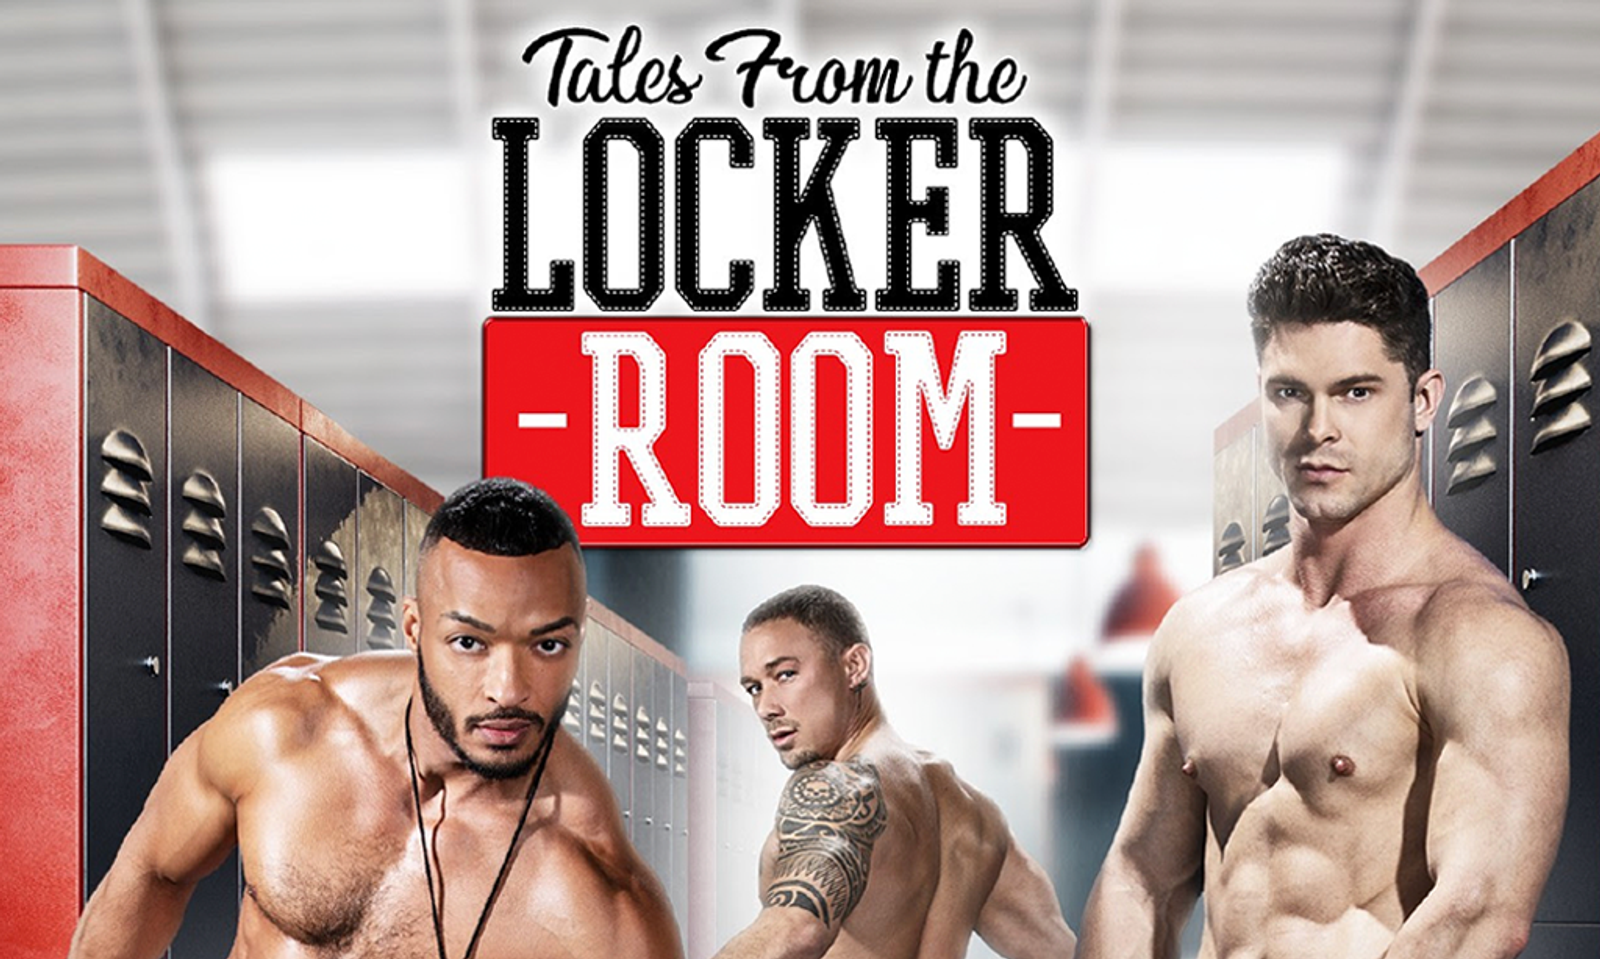 Falcon Studios Tells 'Tales from the Locker Room'